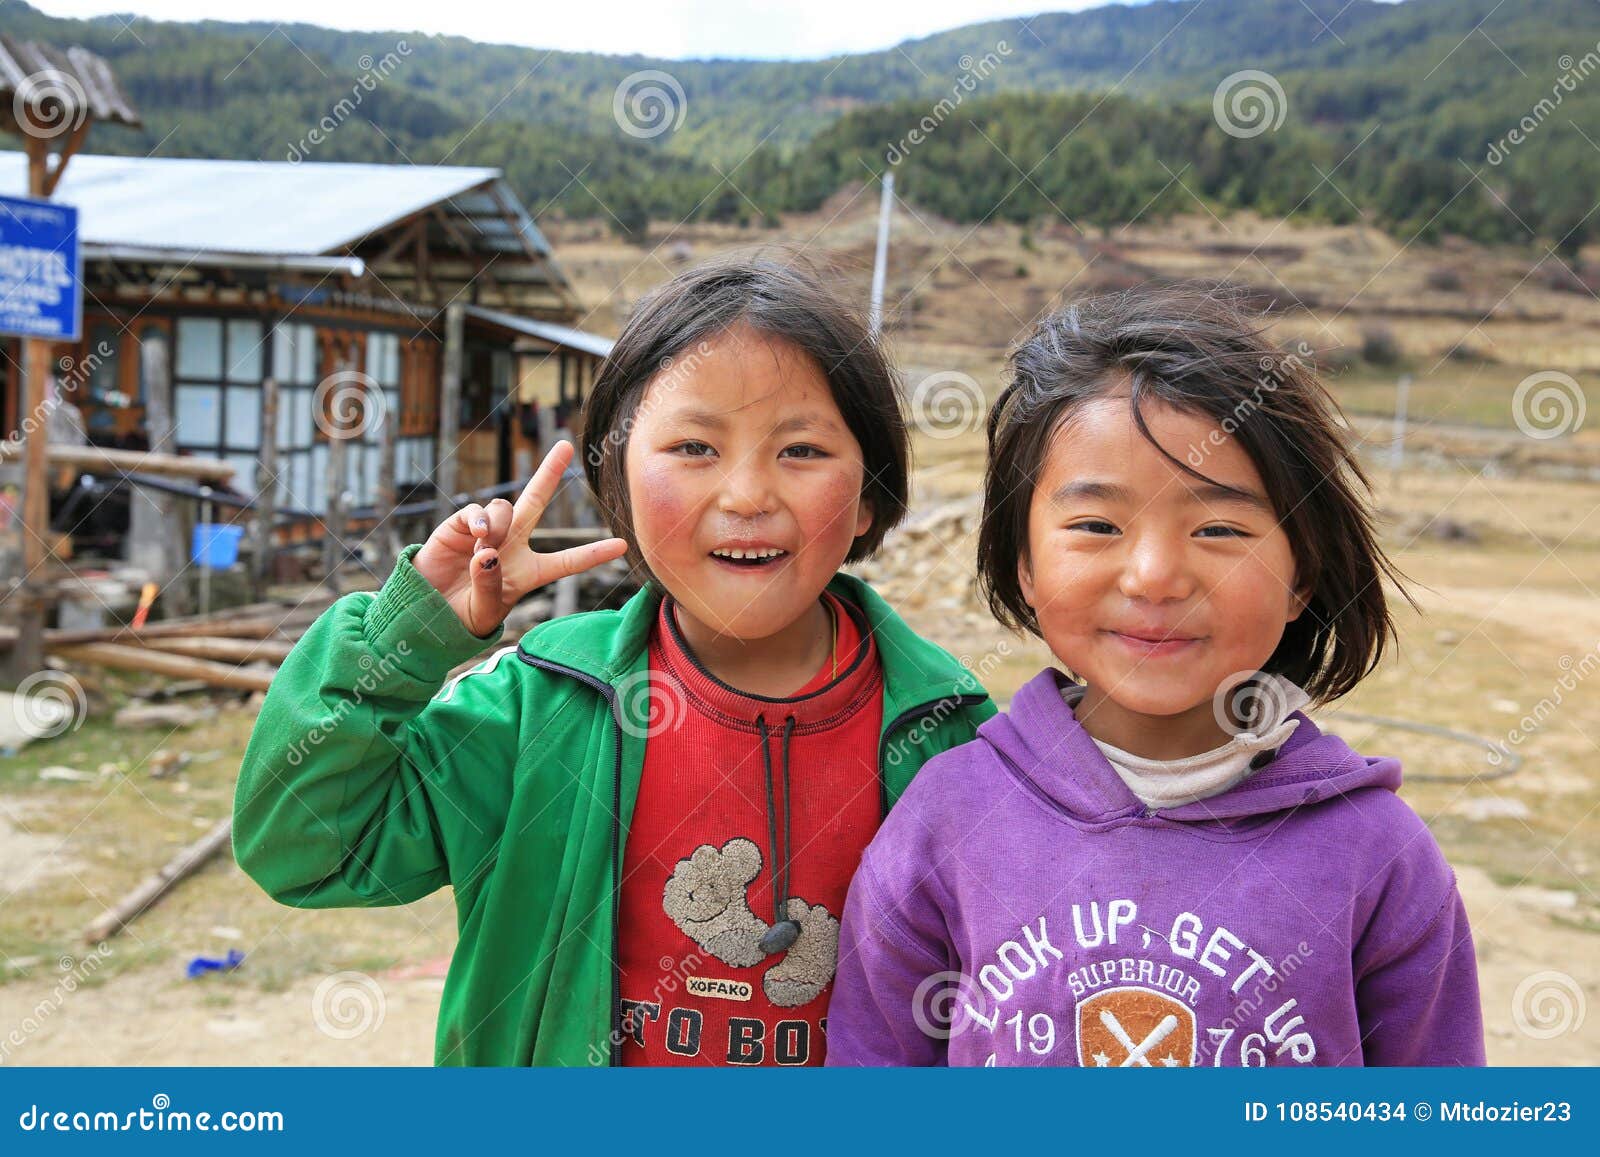 bhutan girls